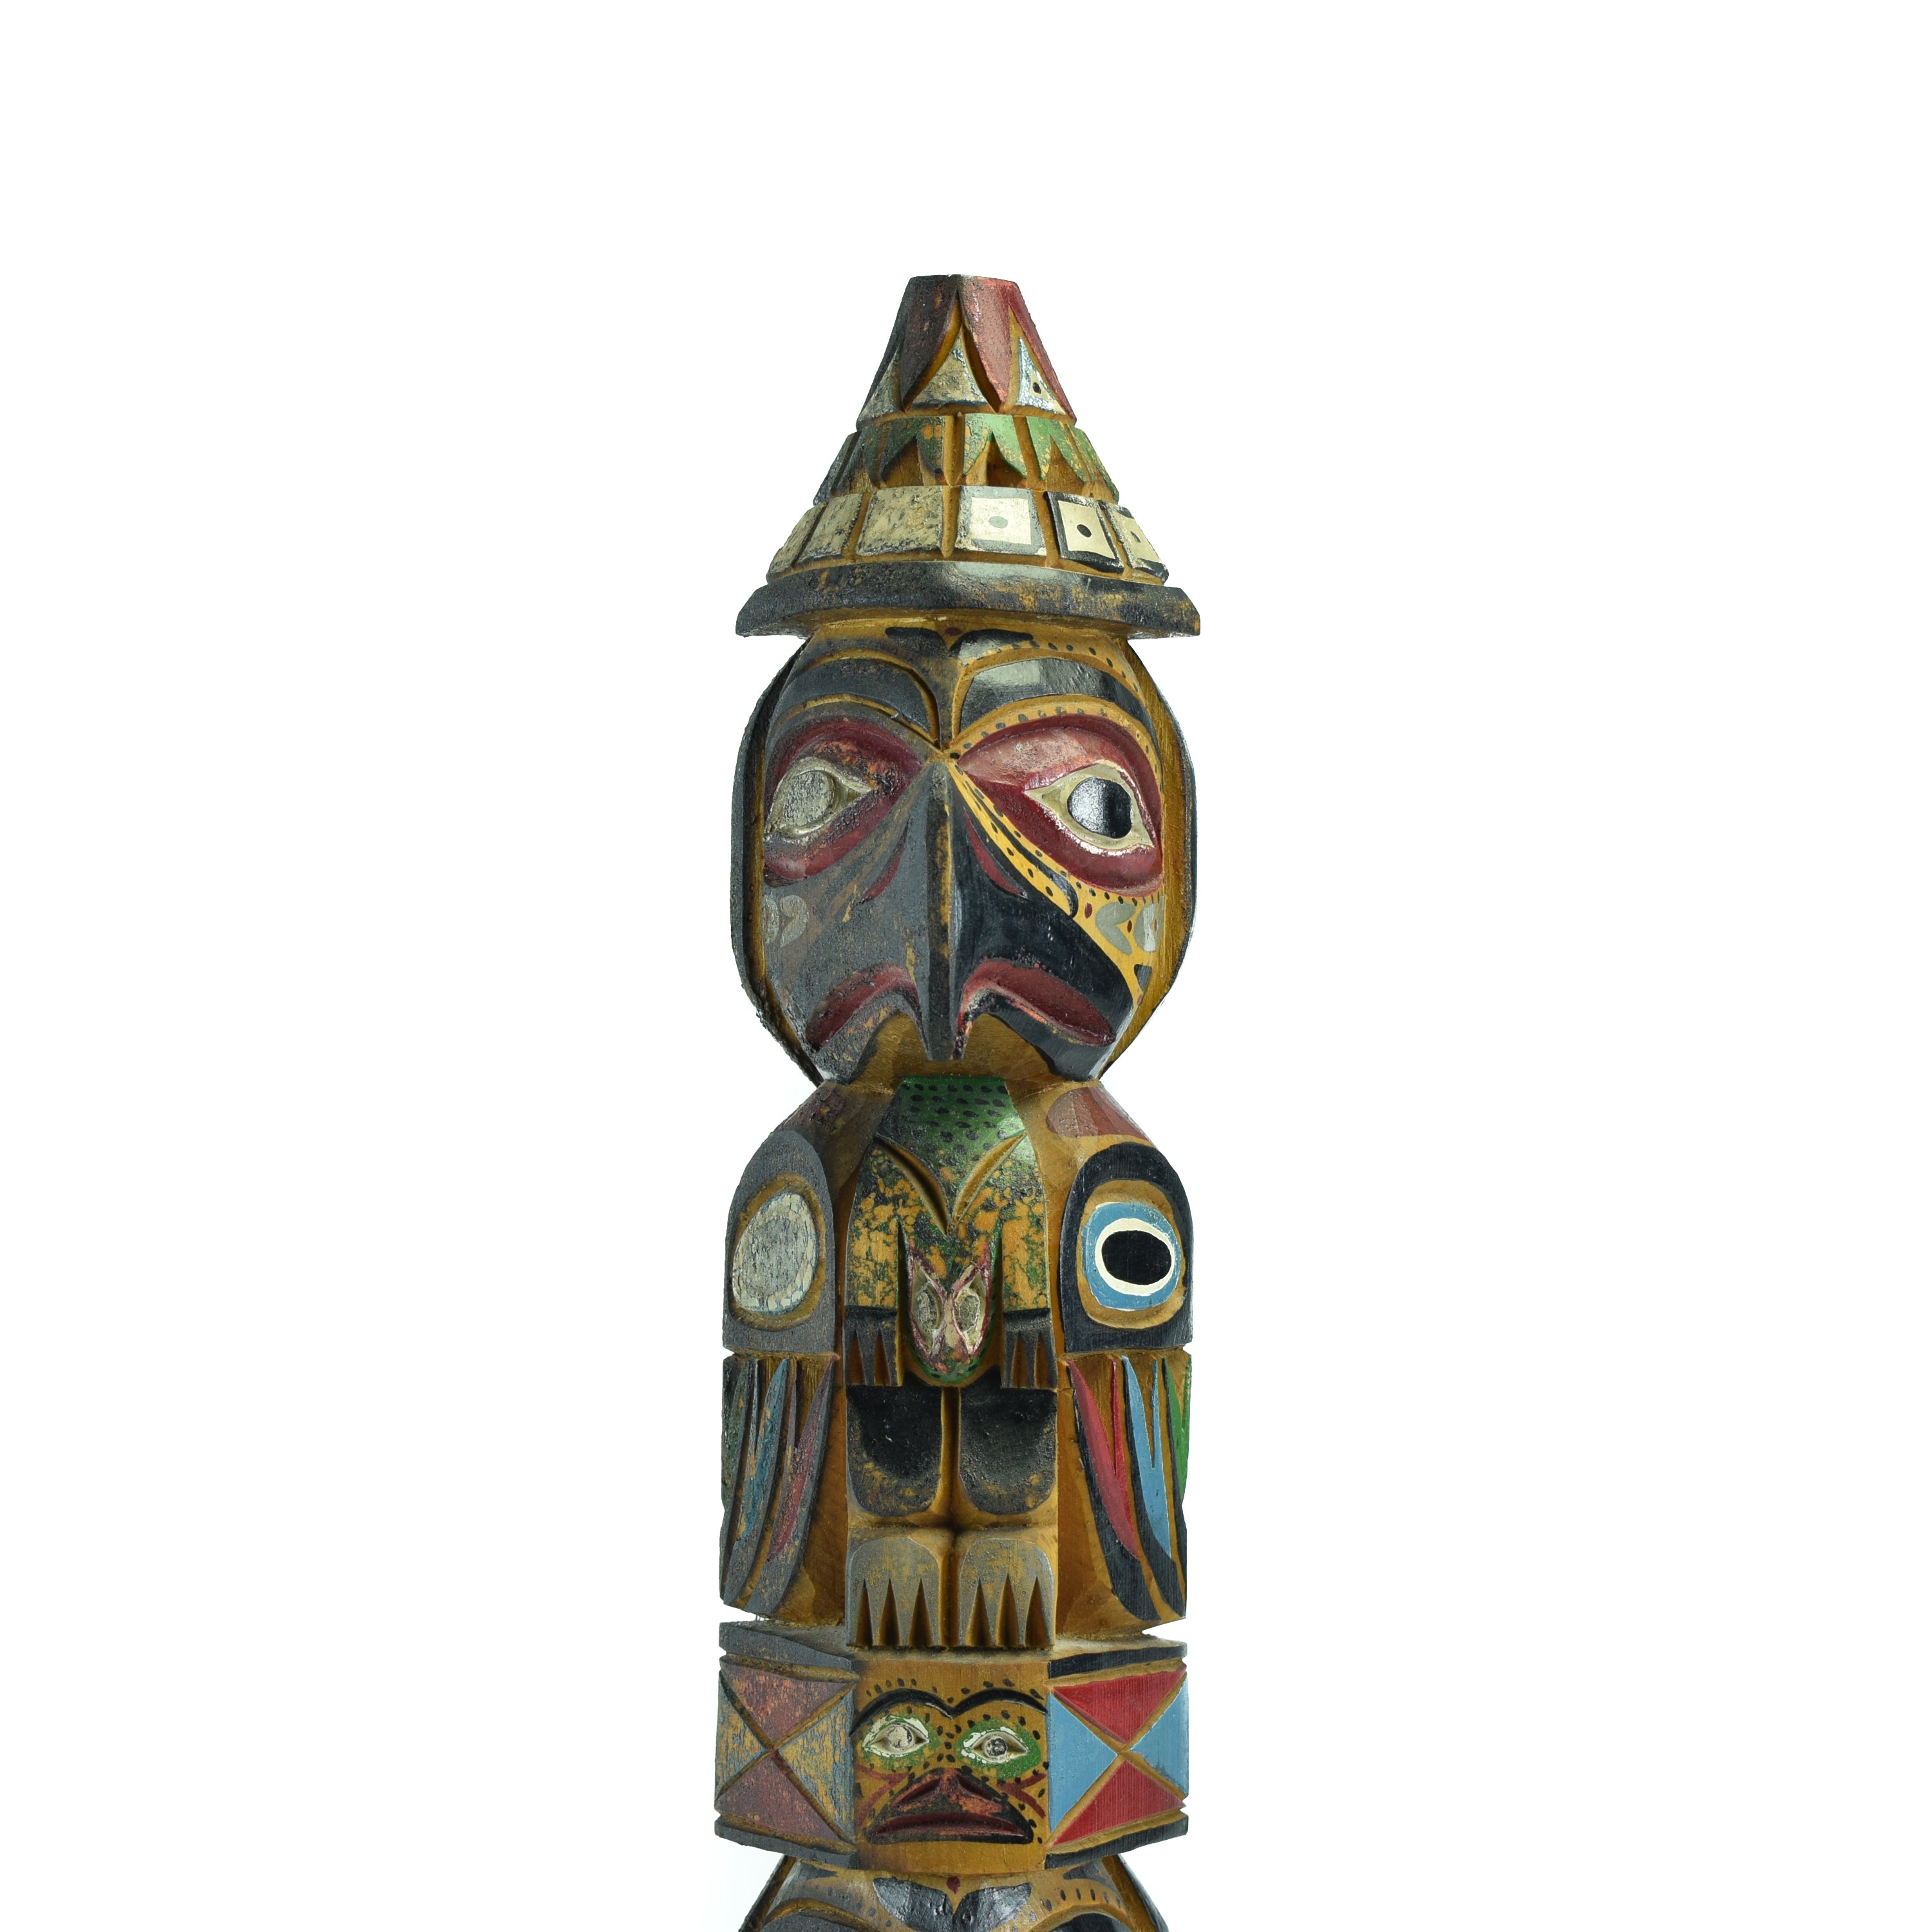 Ditidaht/Nuu-chah-nulth Totem by Raymond Williams